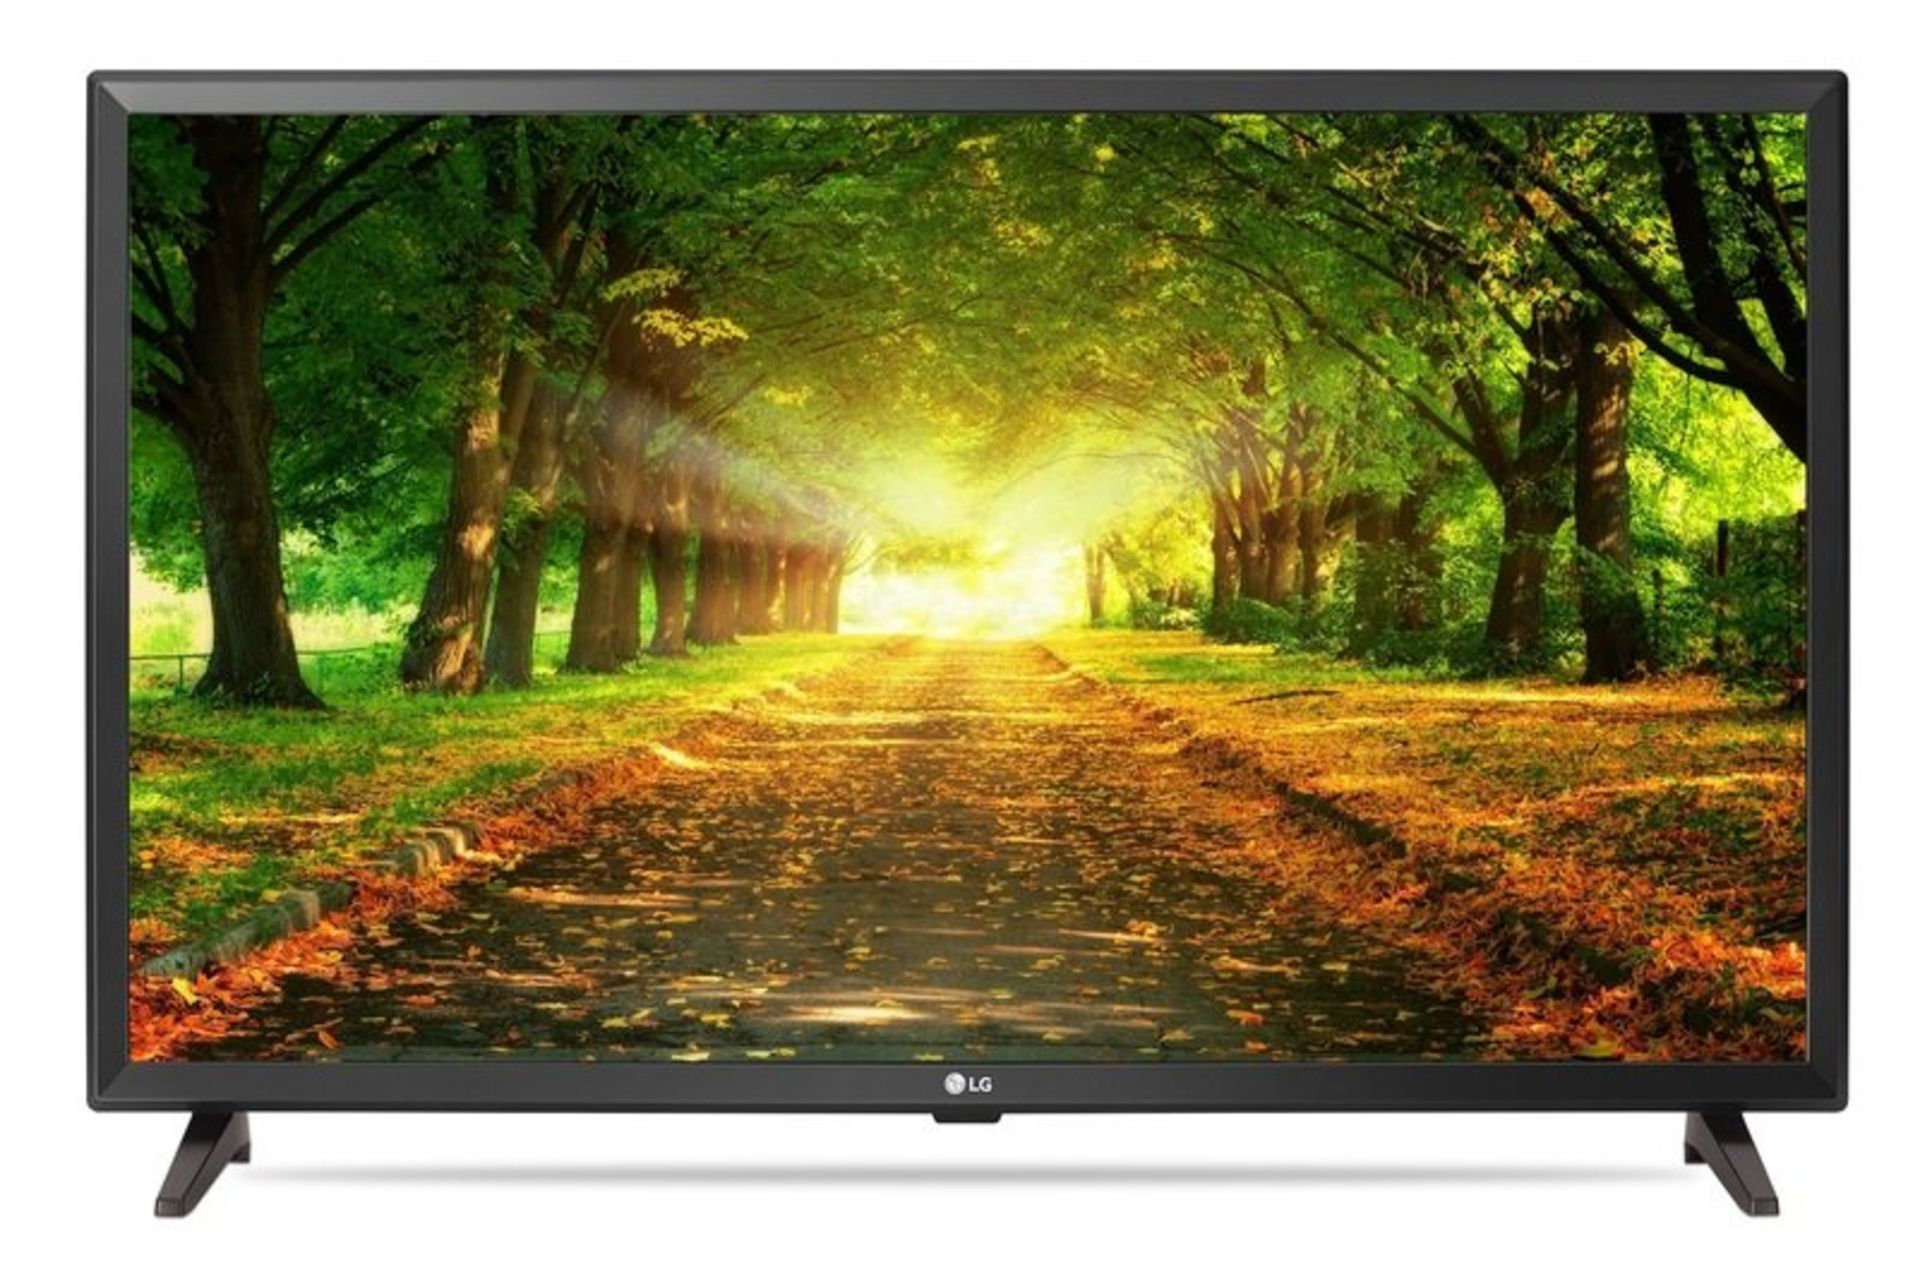 V Grade A LG 32 inch HD READY LED TV WITH FREEVIEW HD32LJ510U